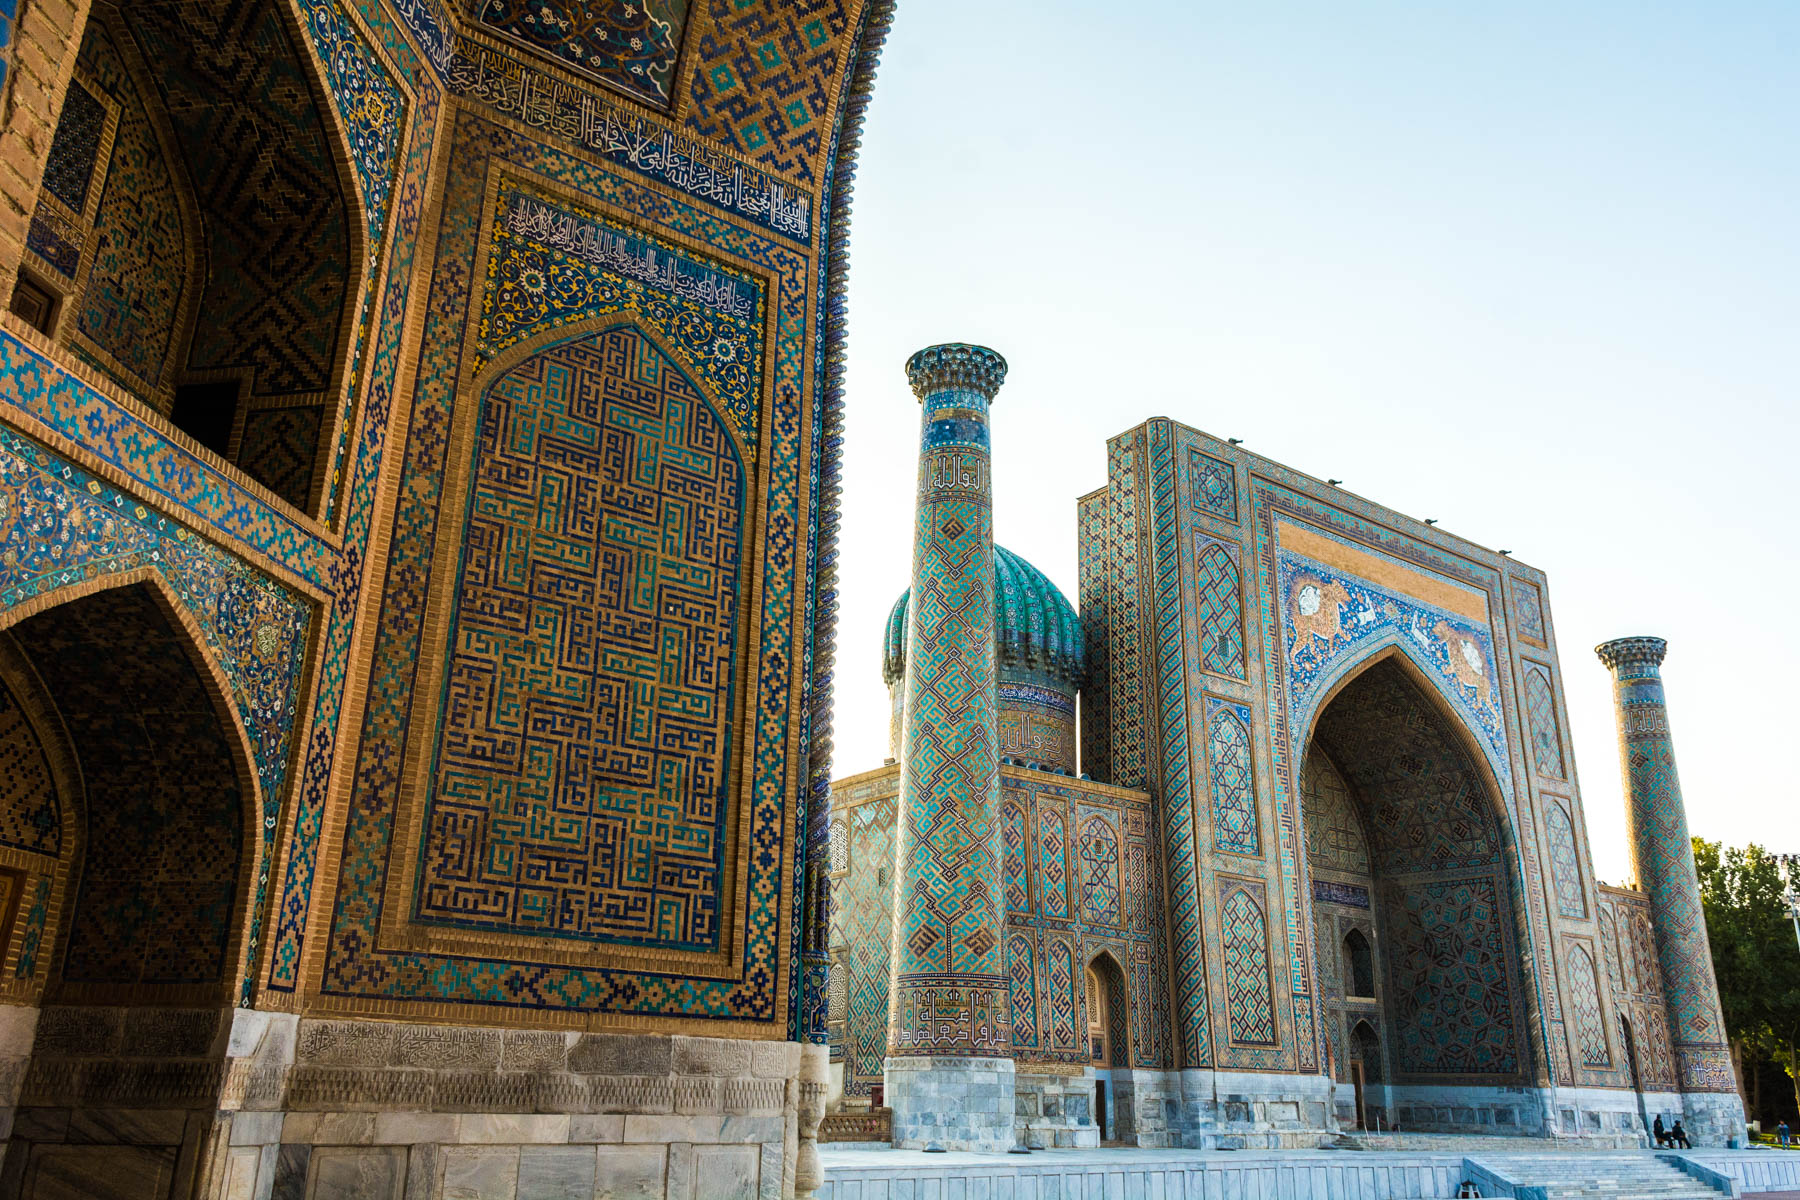 Sunrise in Samarkand, Uzbekistan - Lost With Purpose